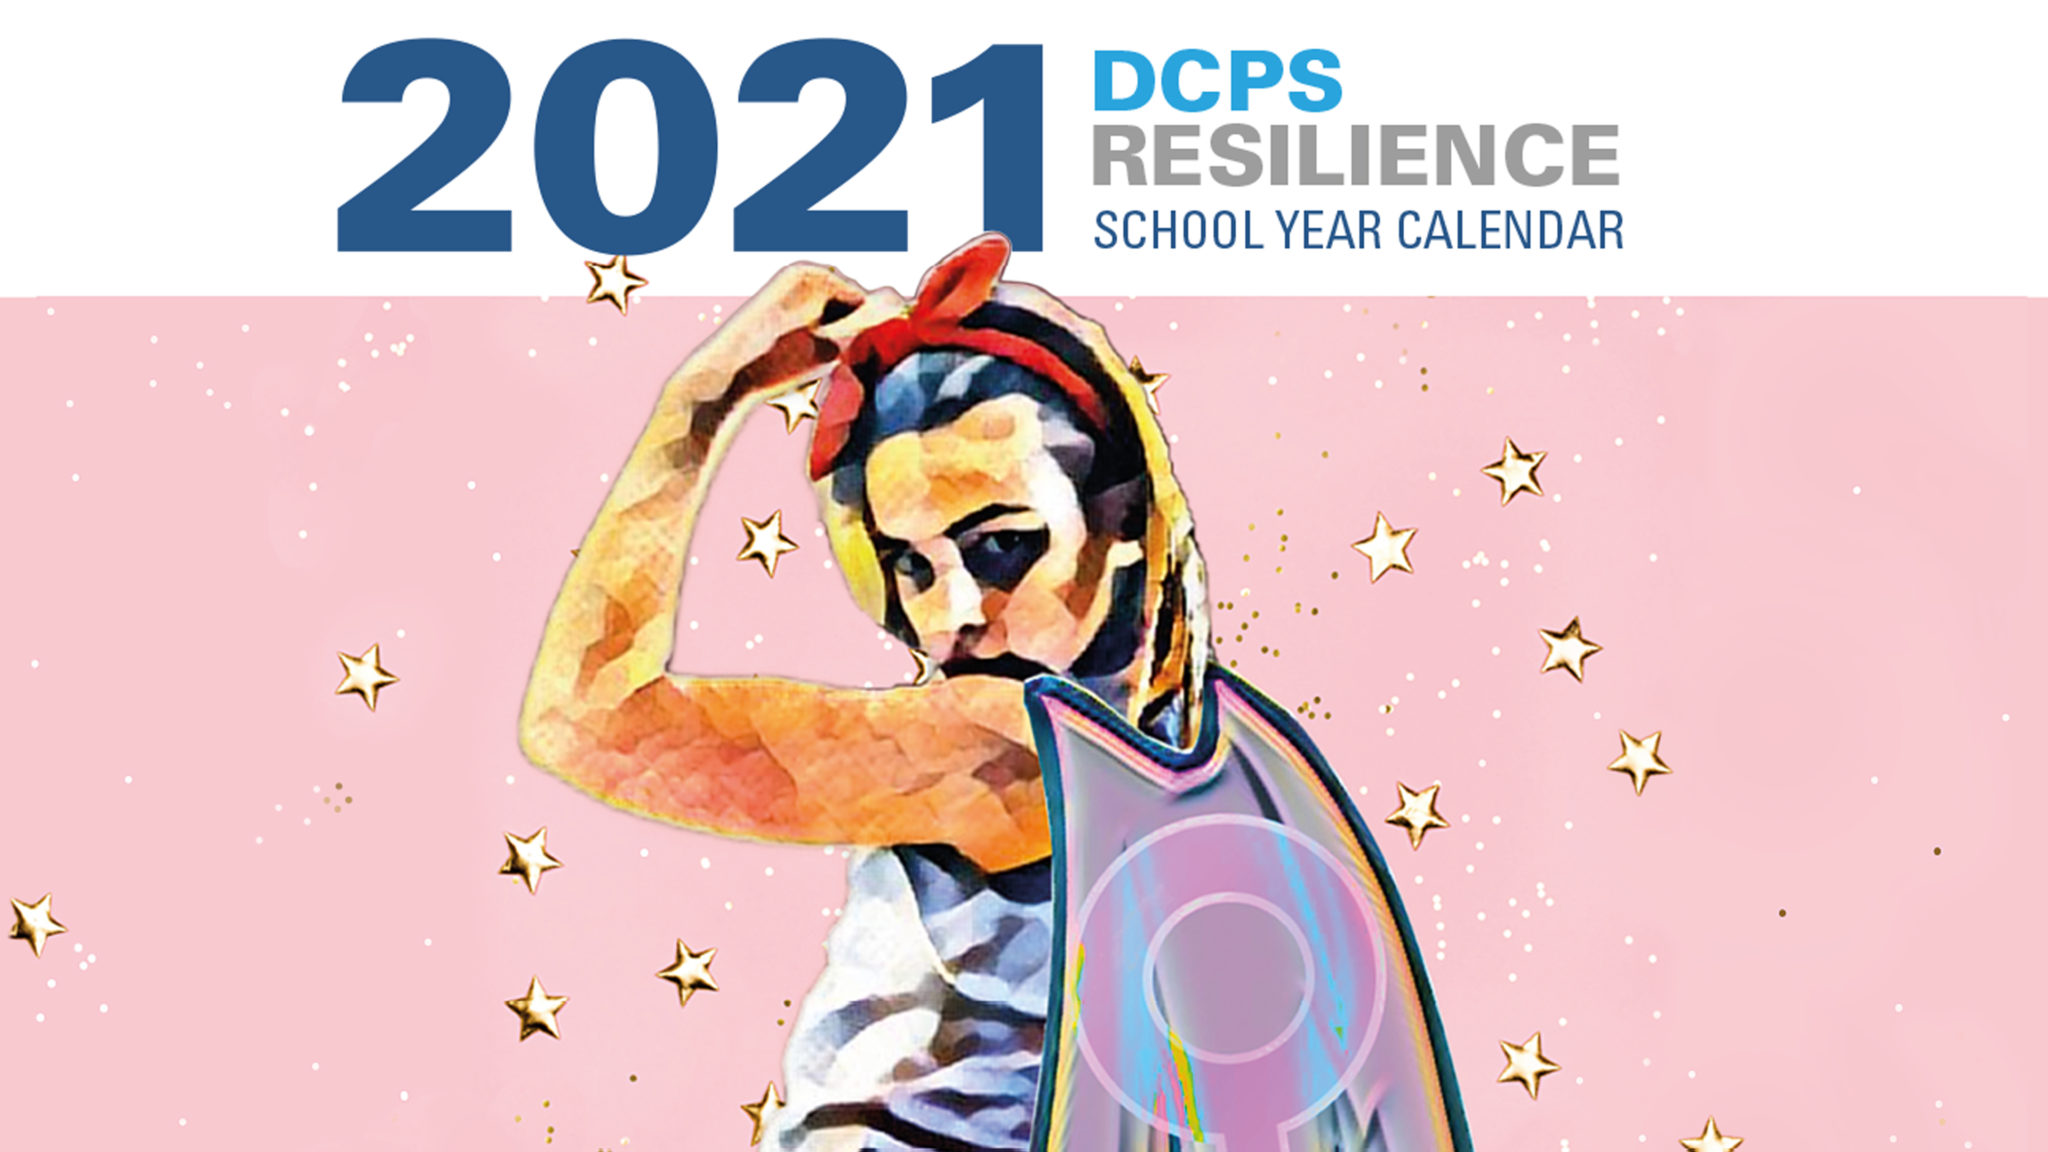 dcps-calendar-1-michael-marshall-design